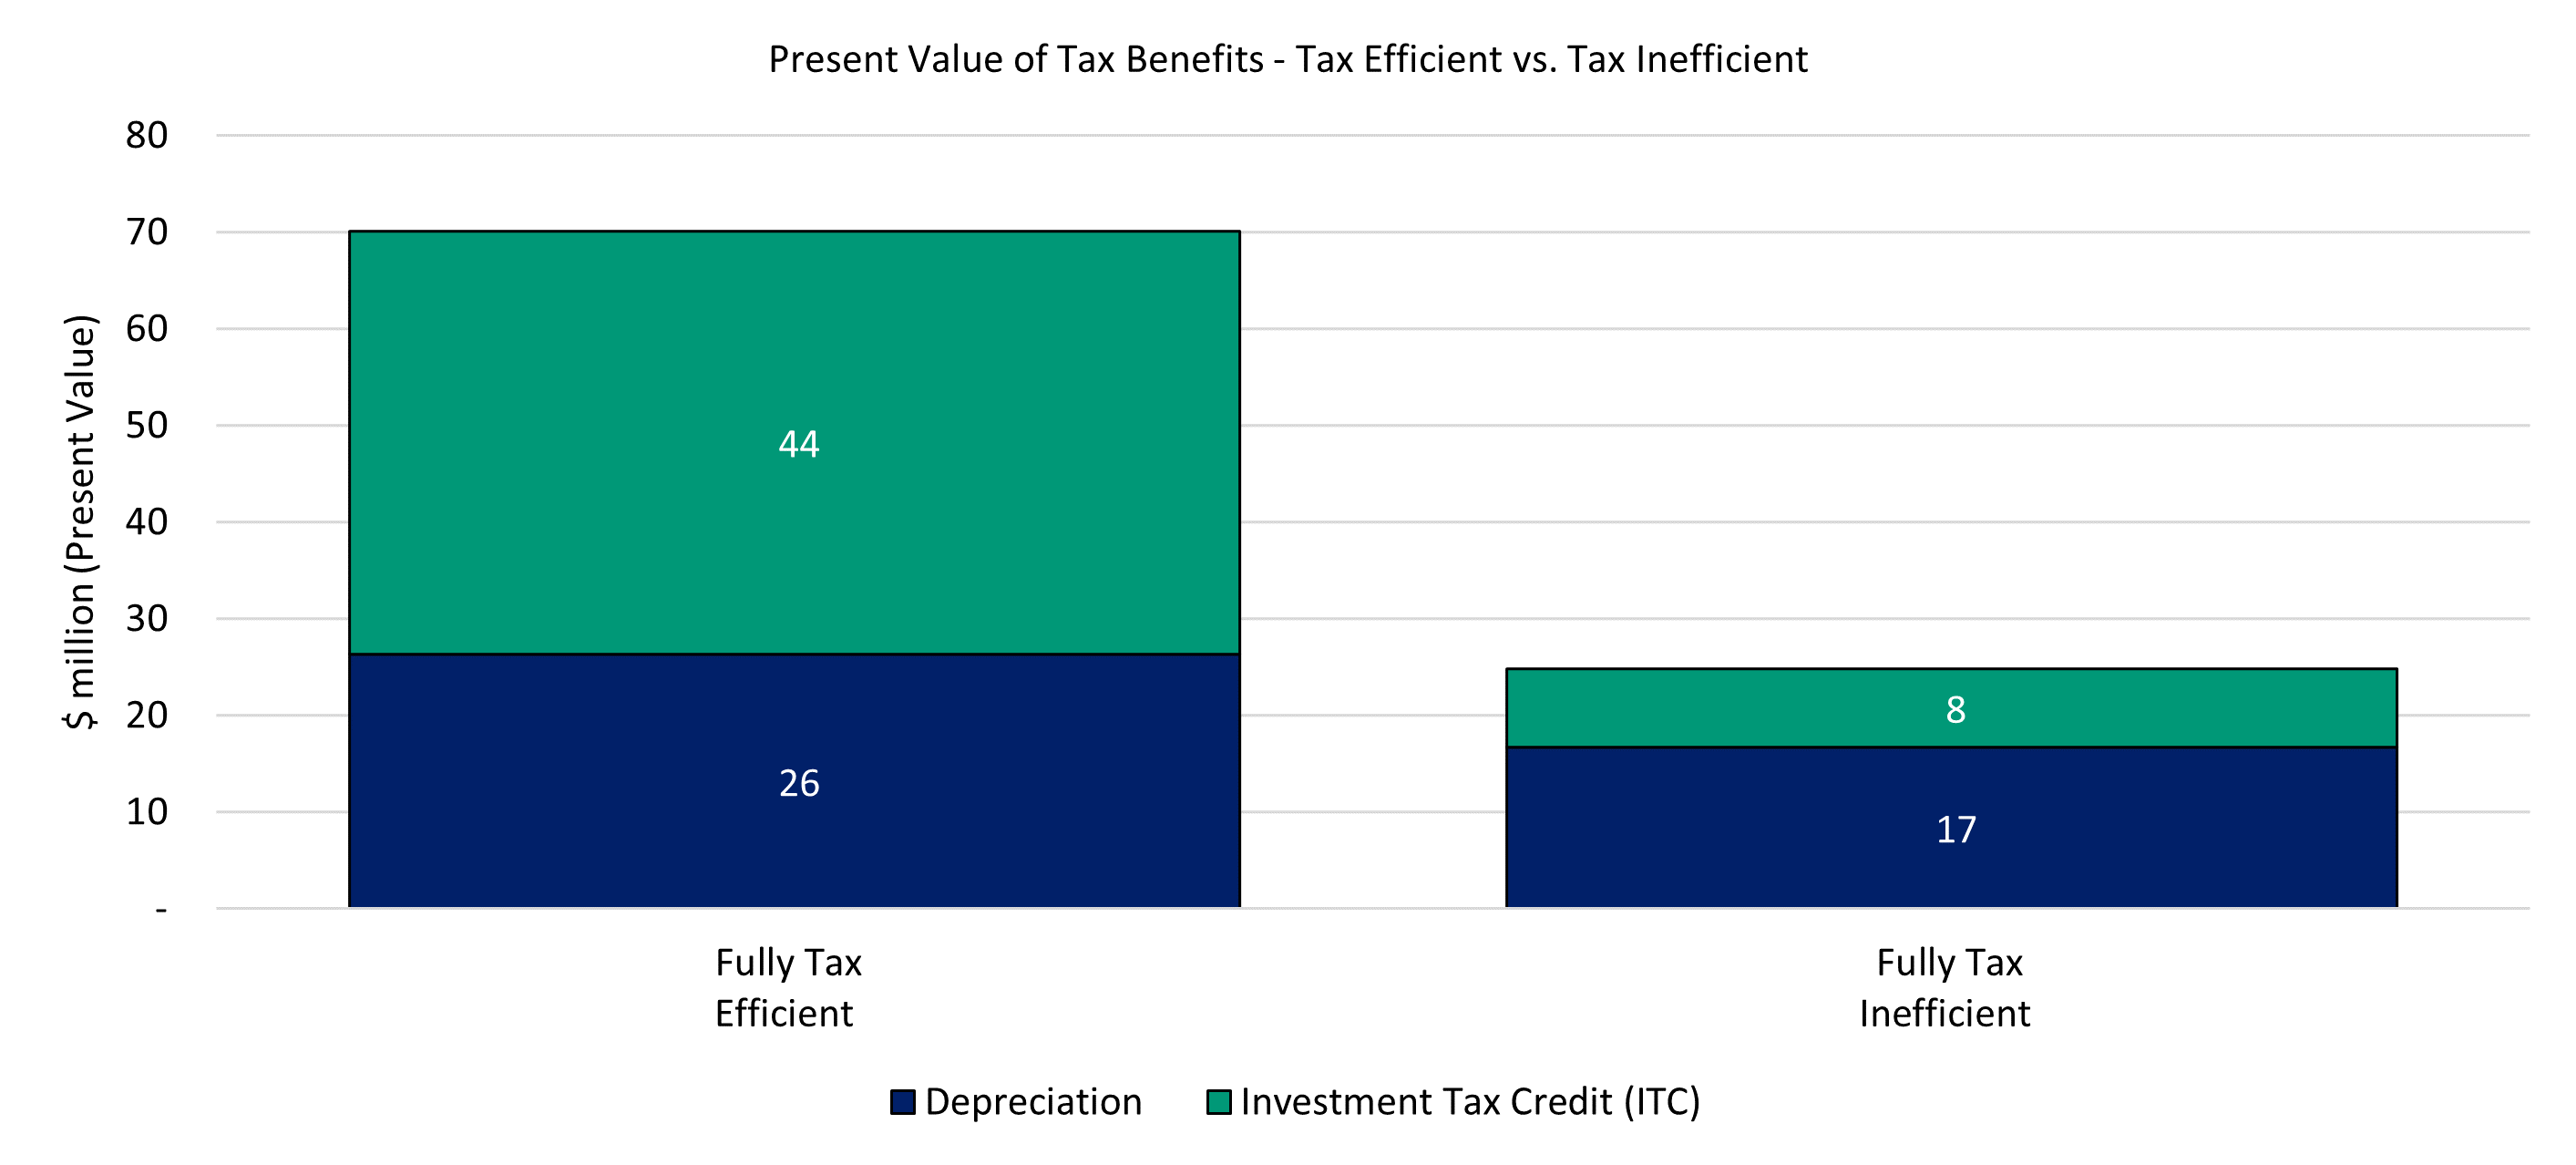 Efficient vs. inefficient value of tax benefits